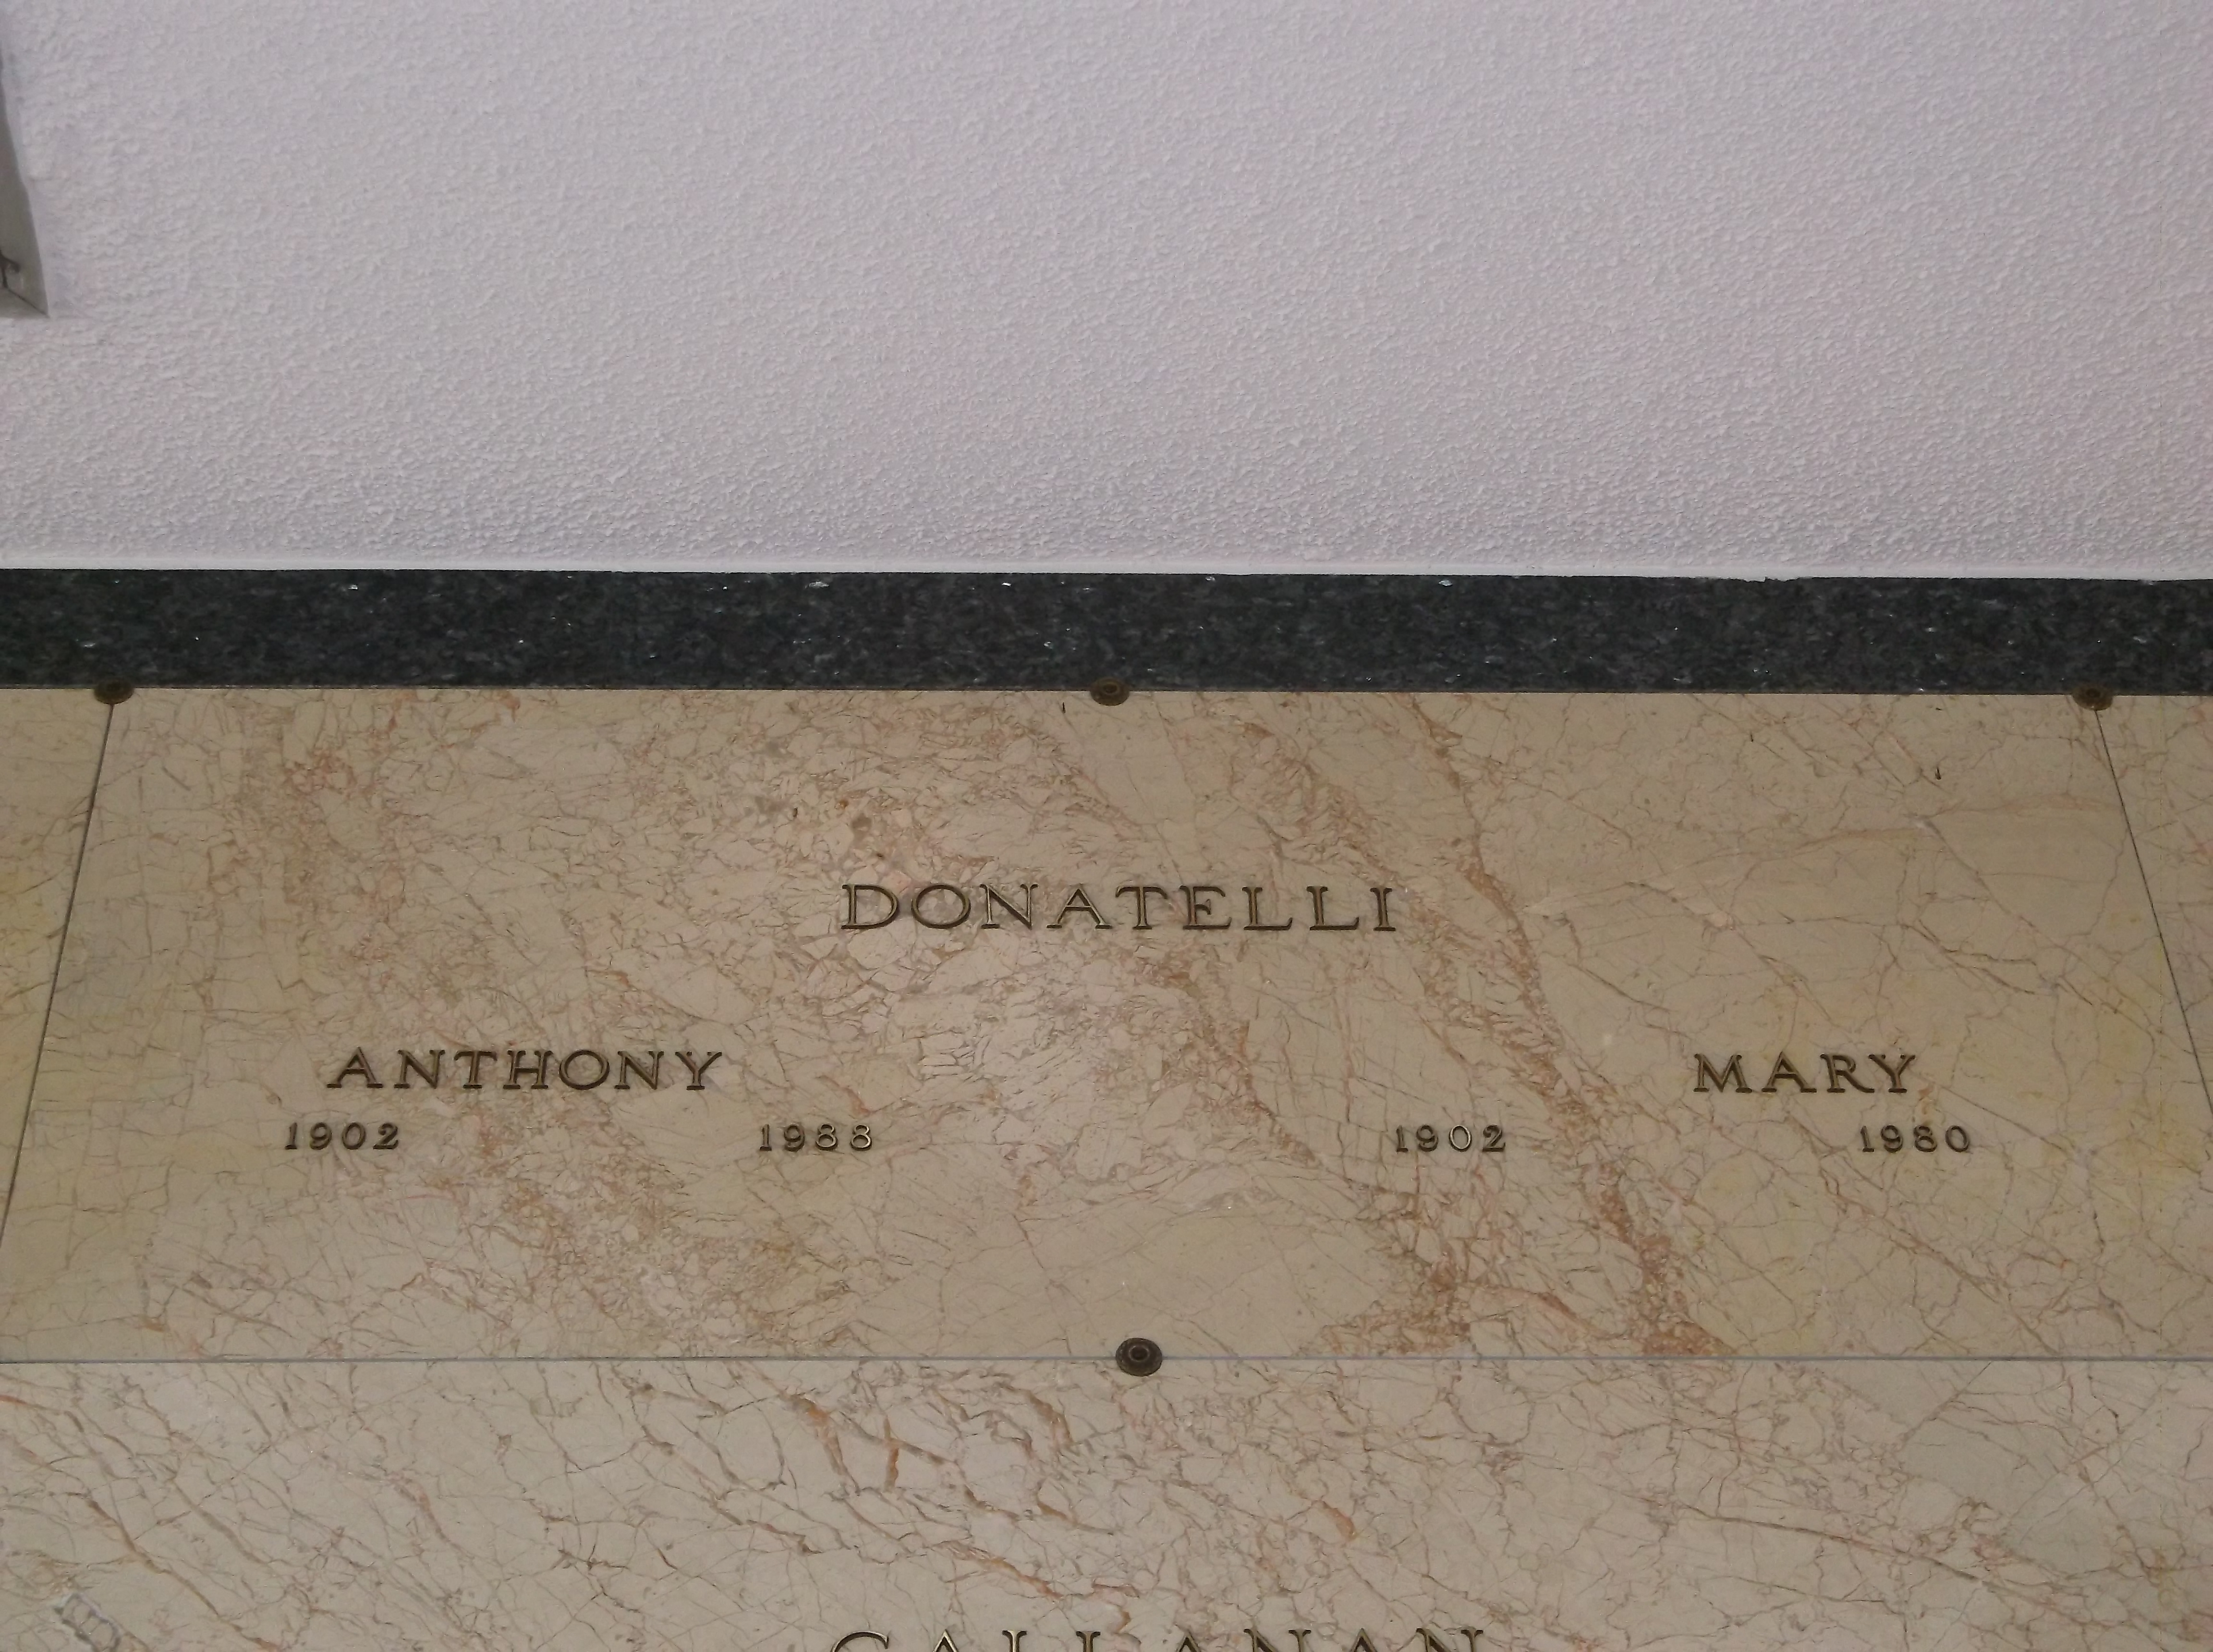 Anthony Donatelli